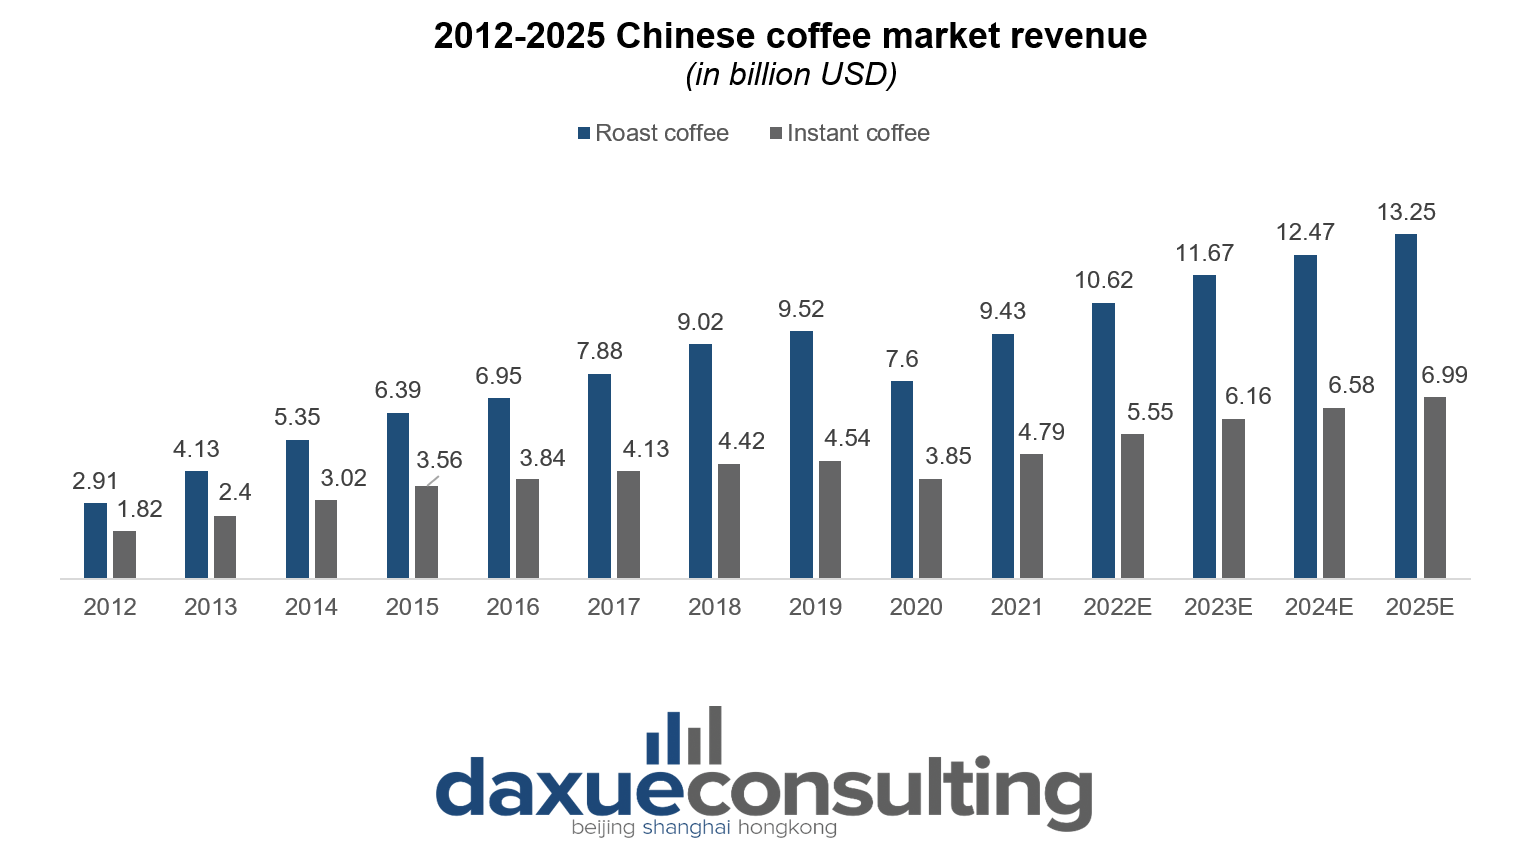 China's coffee market